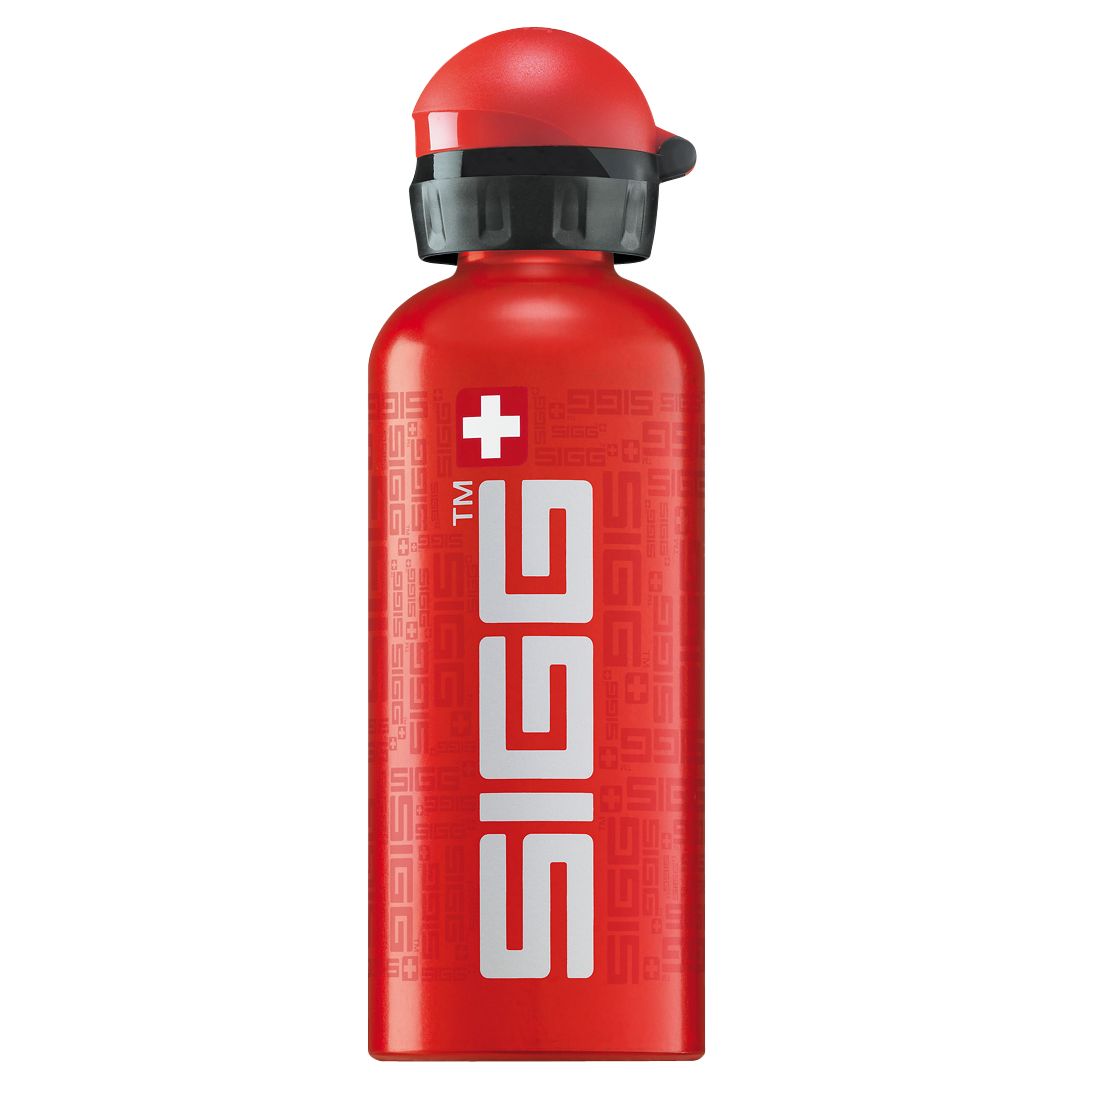 Sigg Sports Bottle, 0.6L, Red